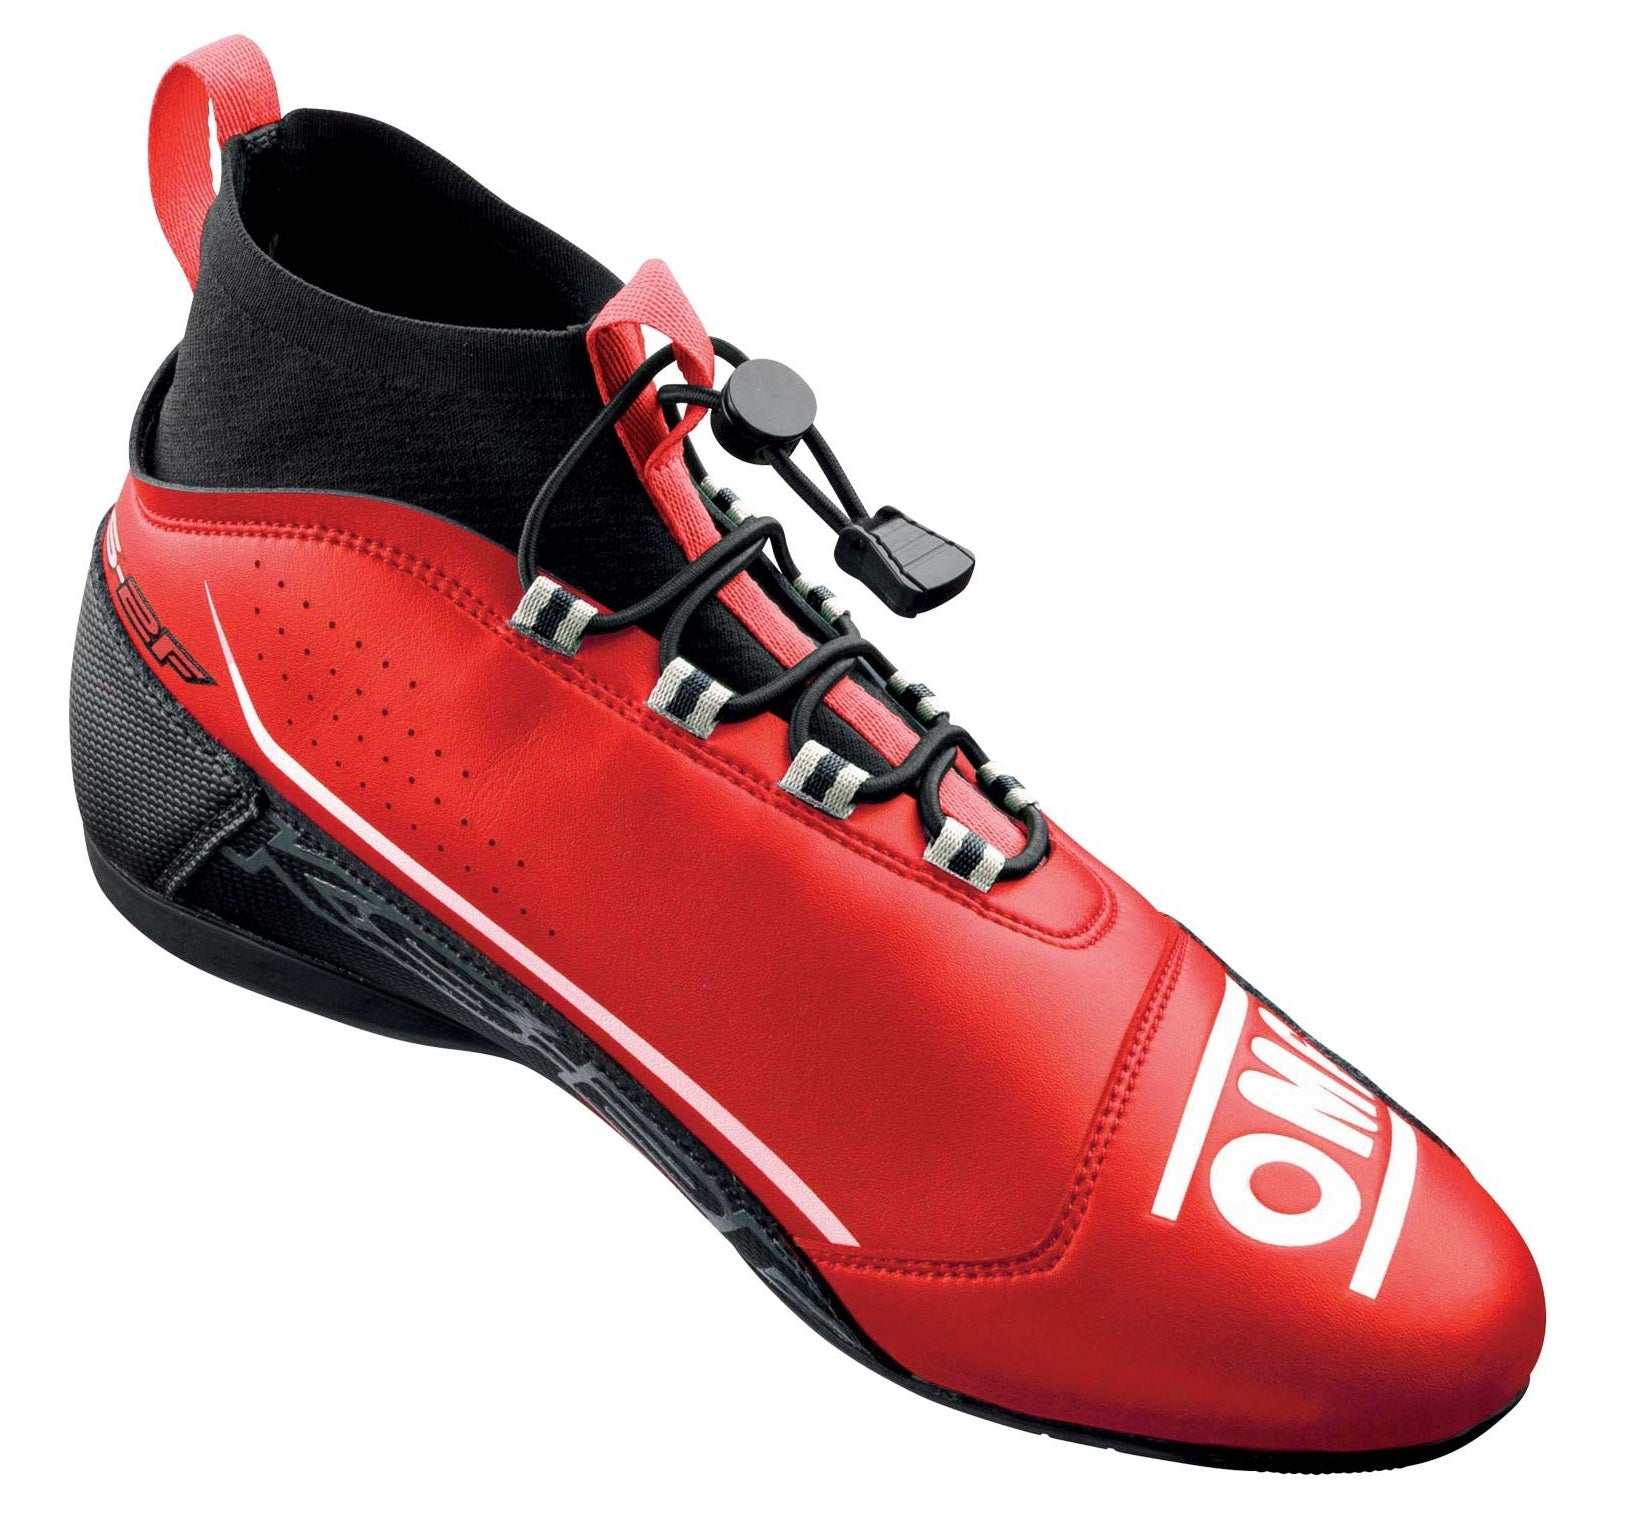 OMP KC0-0830-A01-060-33 KS-2F Karting shoes, children, red/black, size 33 Photo-1 